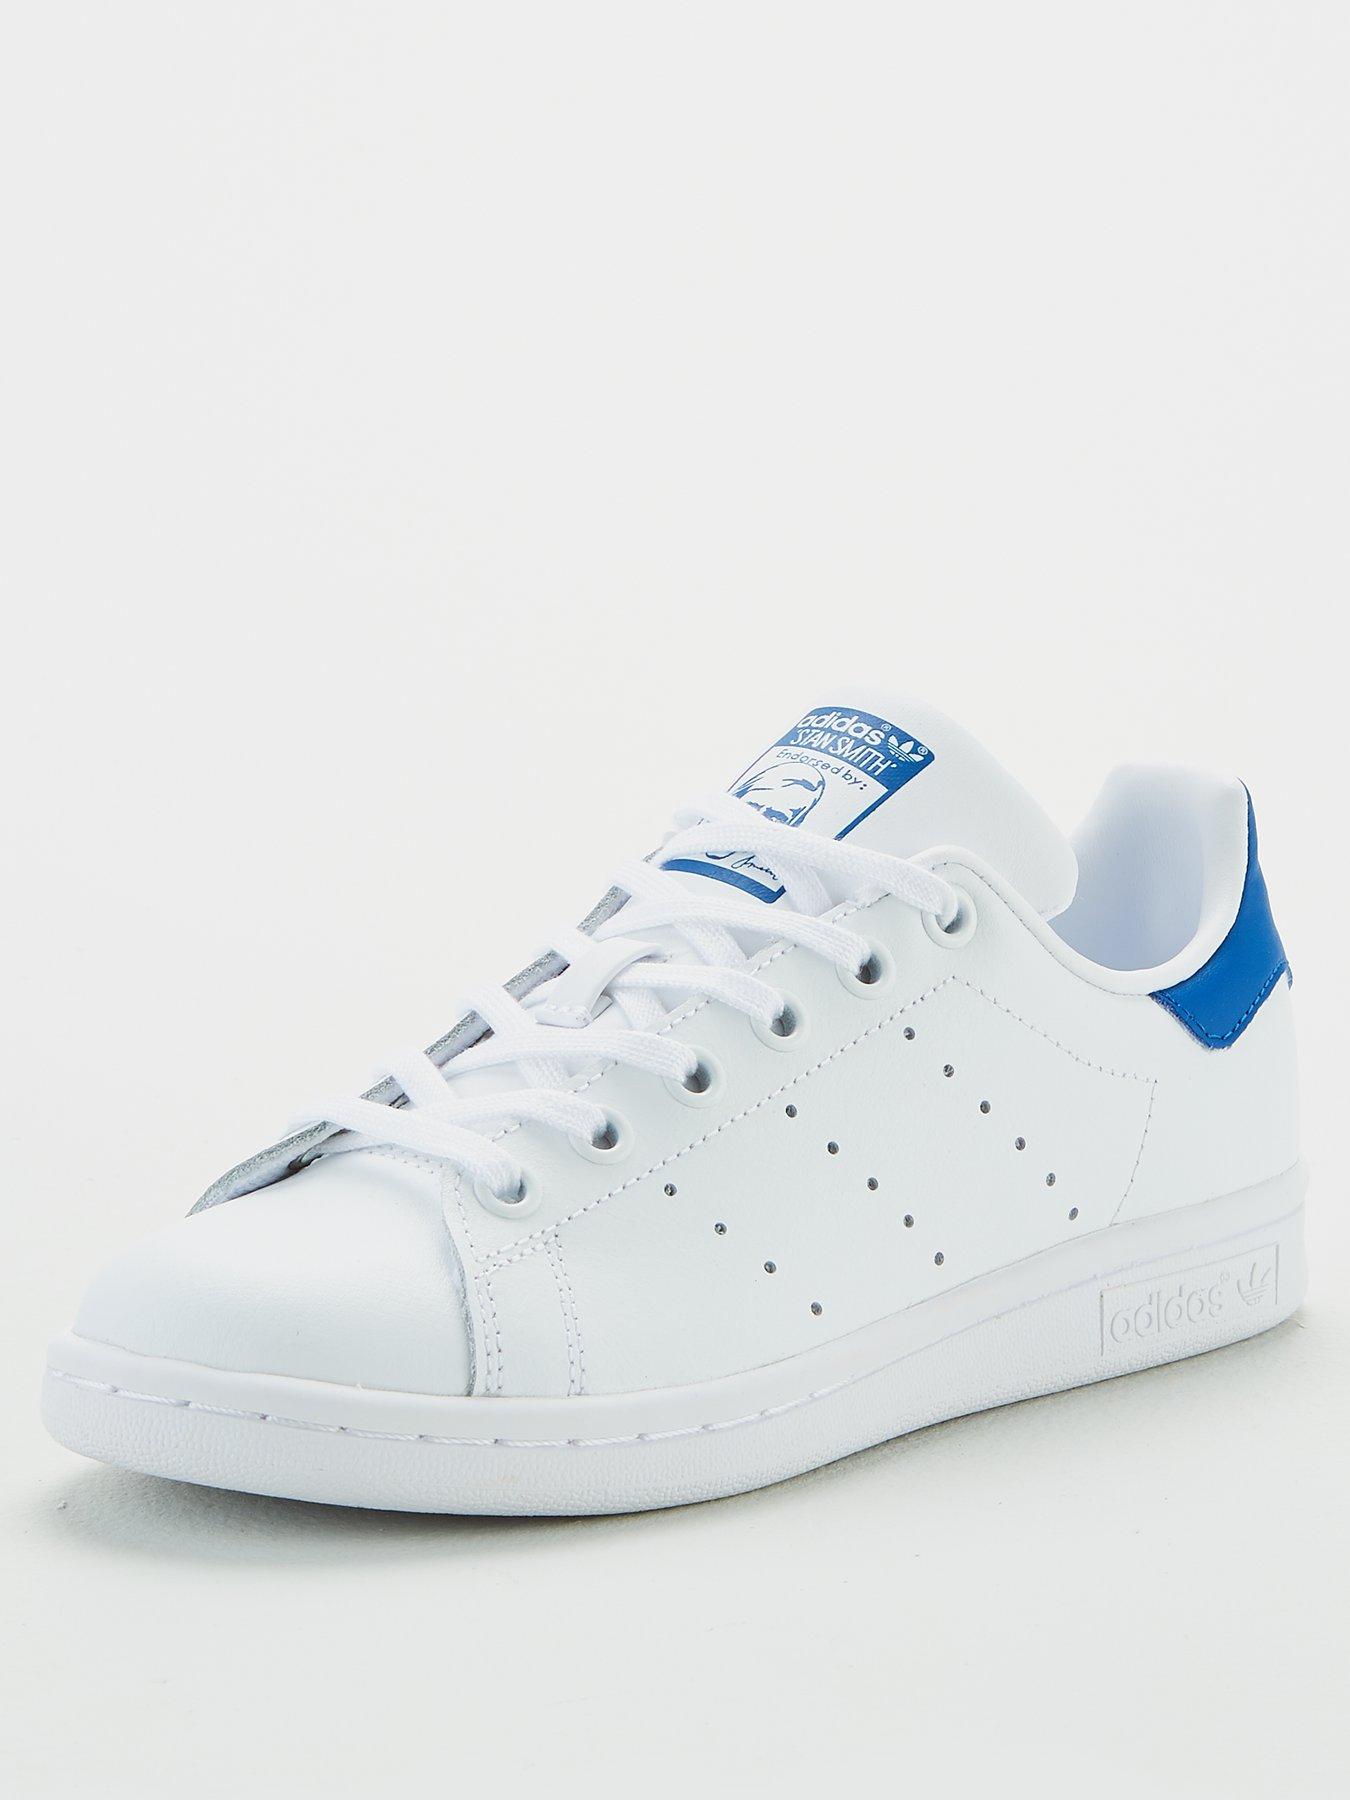 adidas stan smith white and blue